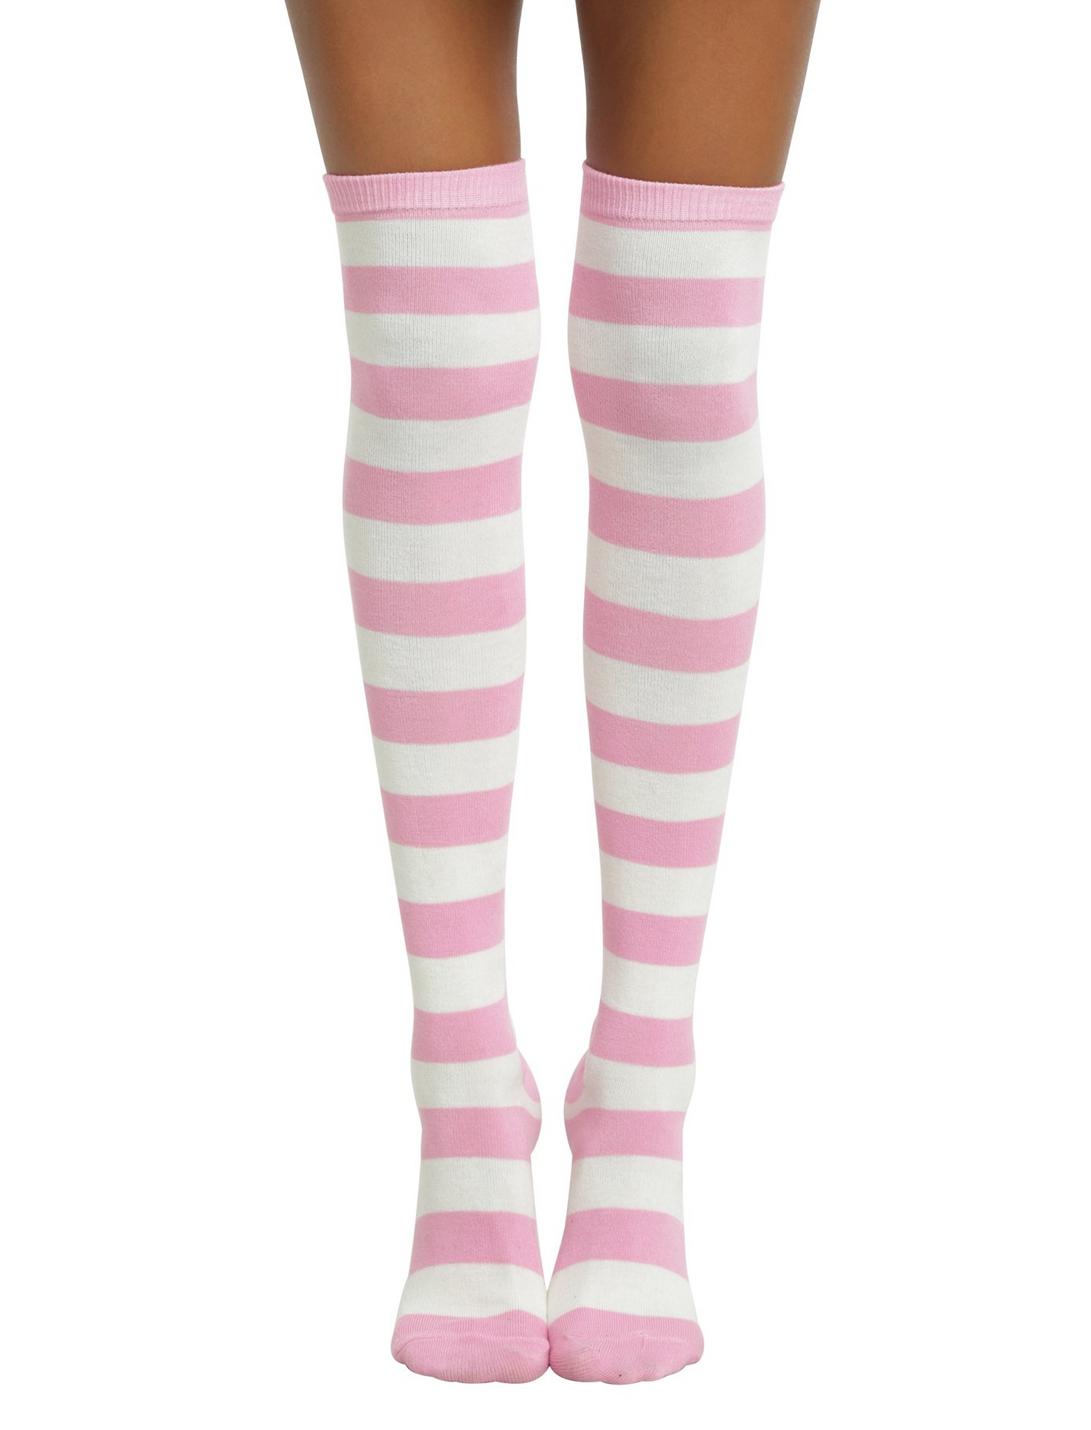 Blackheart Cream & Pink Striped Over-The-Knee Socks, , hi-res